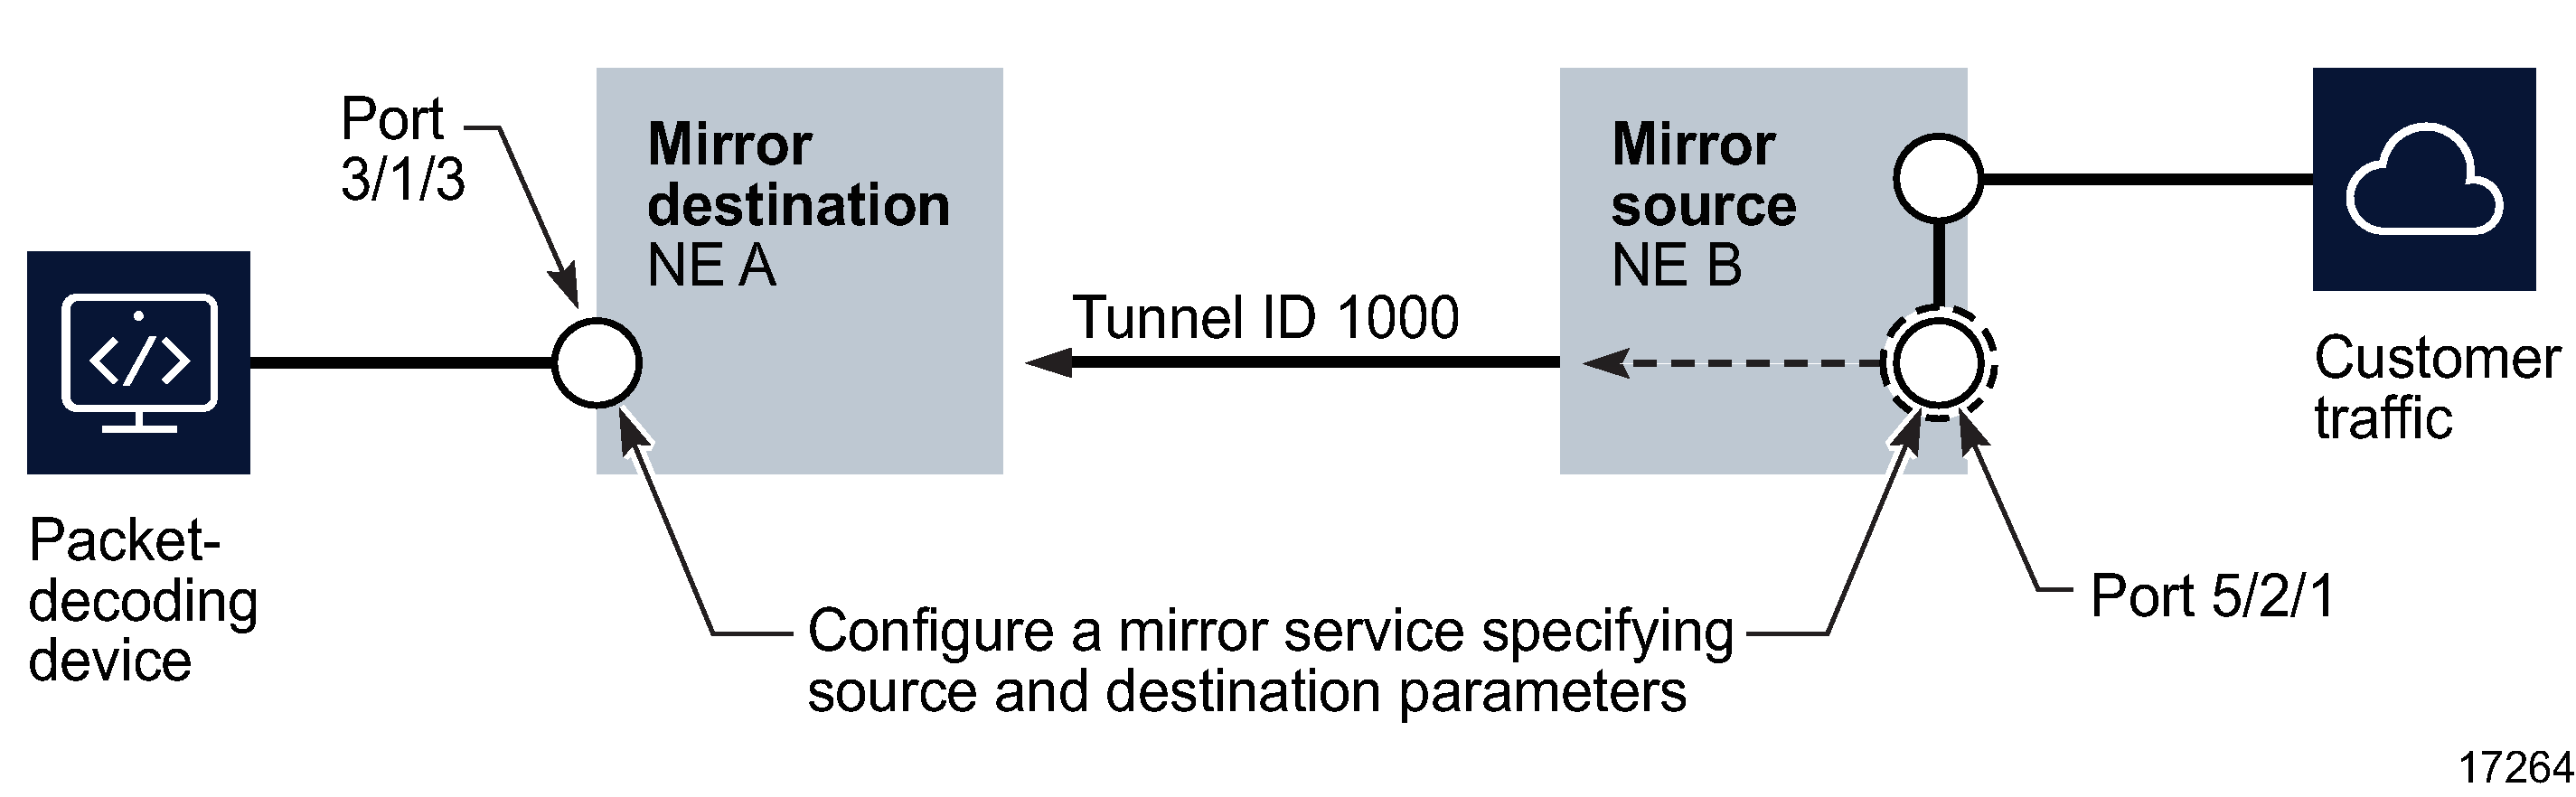 Sample mirror service configuration